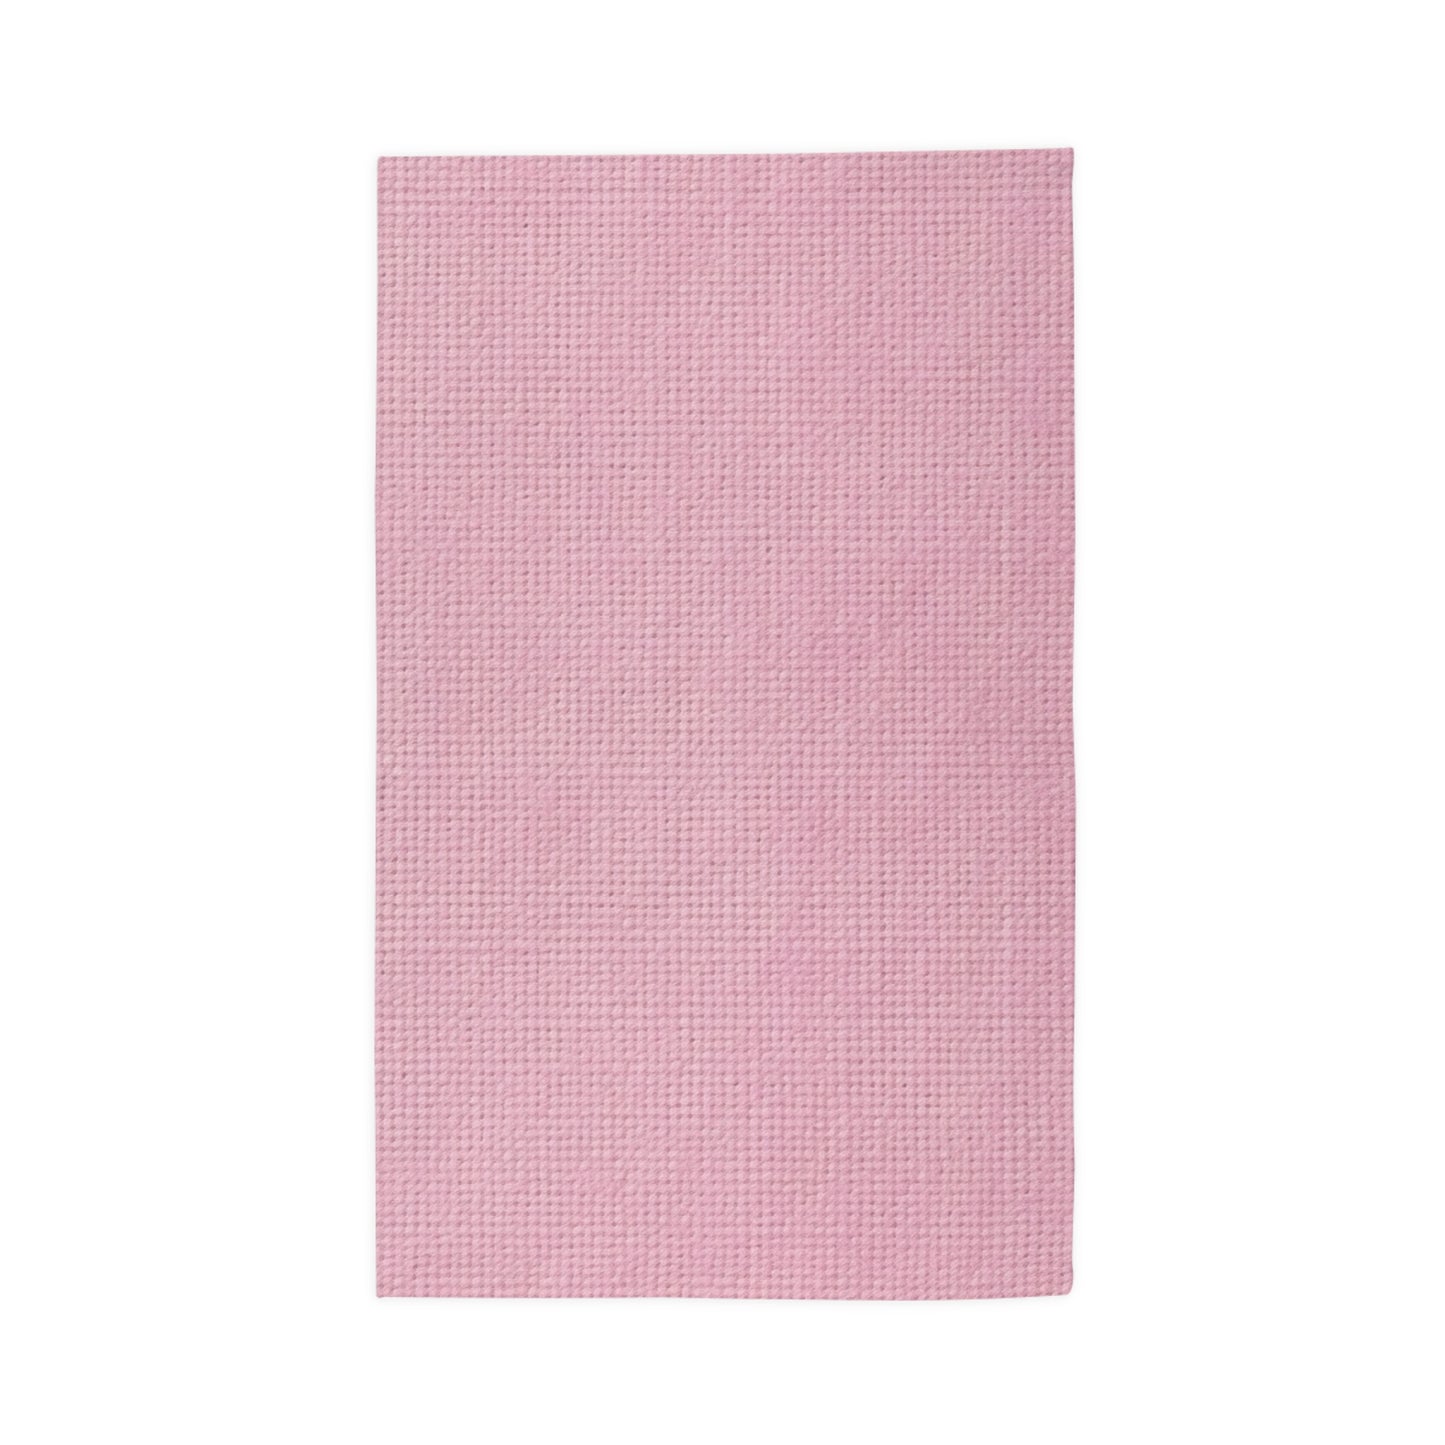 Blushing Garment Dye Pink: Denim-Inspired, Soft-Toned Fabric - Dobby Rug